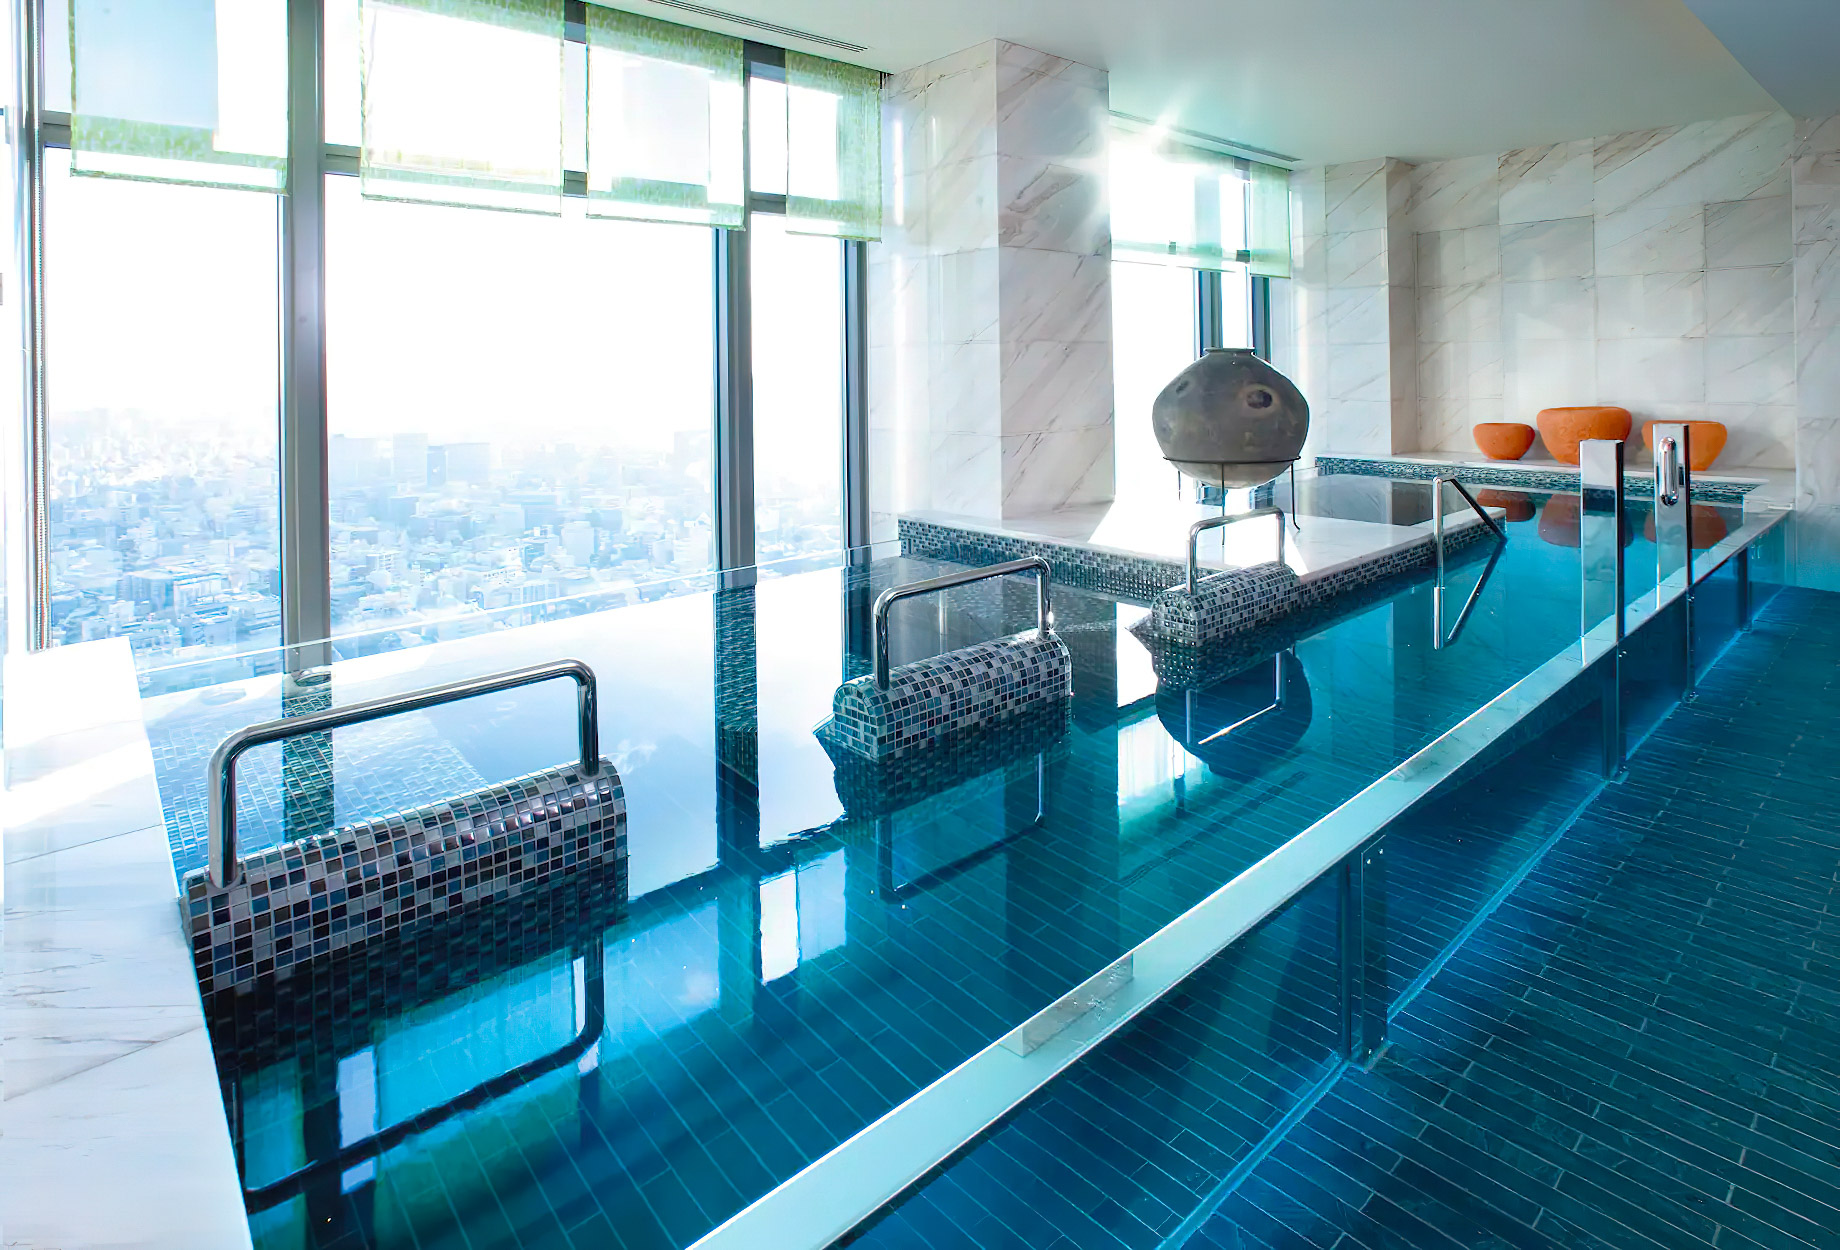 Mandarin Oriental, Tokyo Hotel - Tokyo, Japan - Spa Vitality Pool